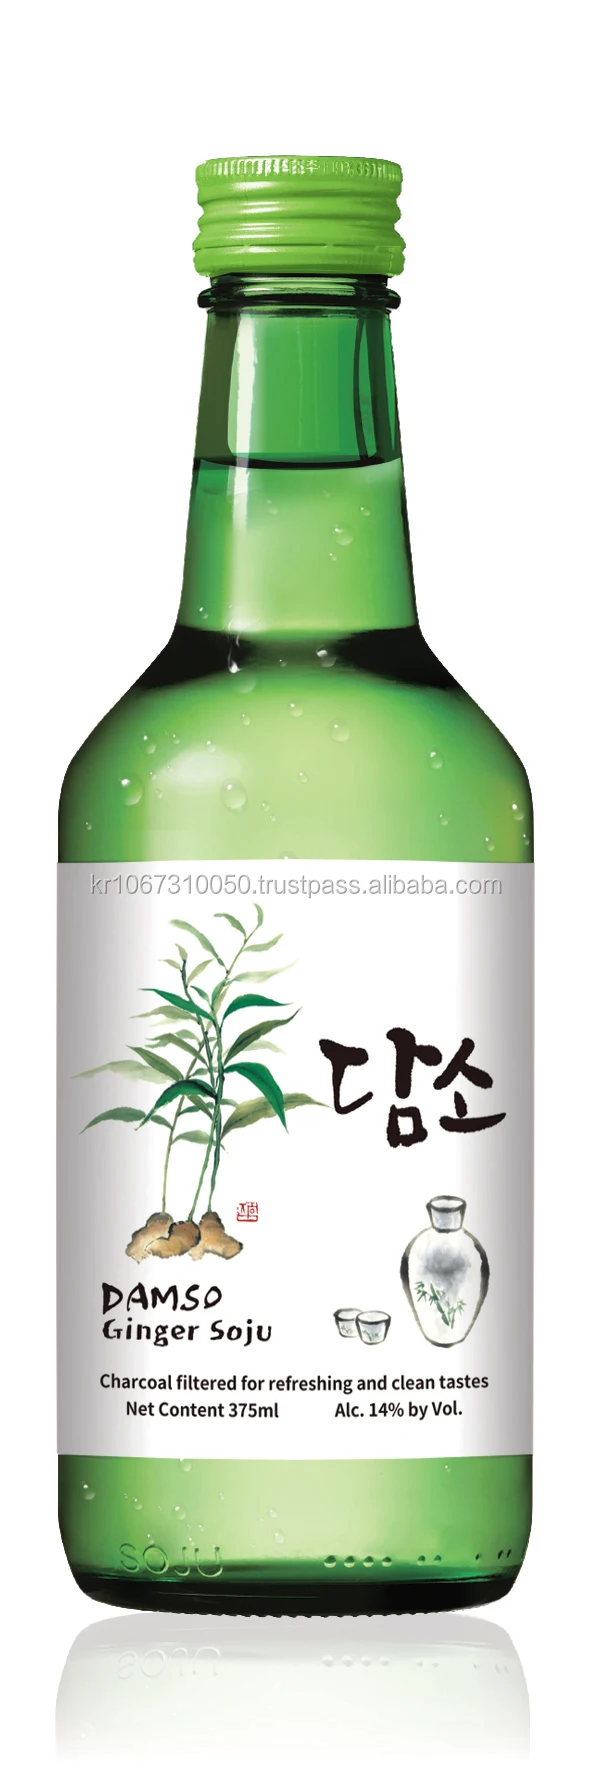 Korea Traditional BBQ Alcohol Beverage Drink Soju DAMSO Various Fruit Flavored 375ml